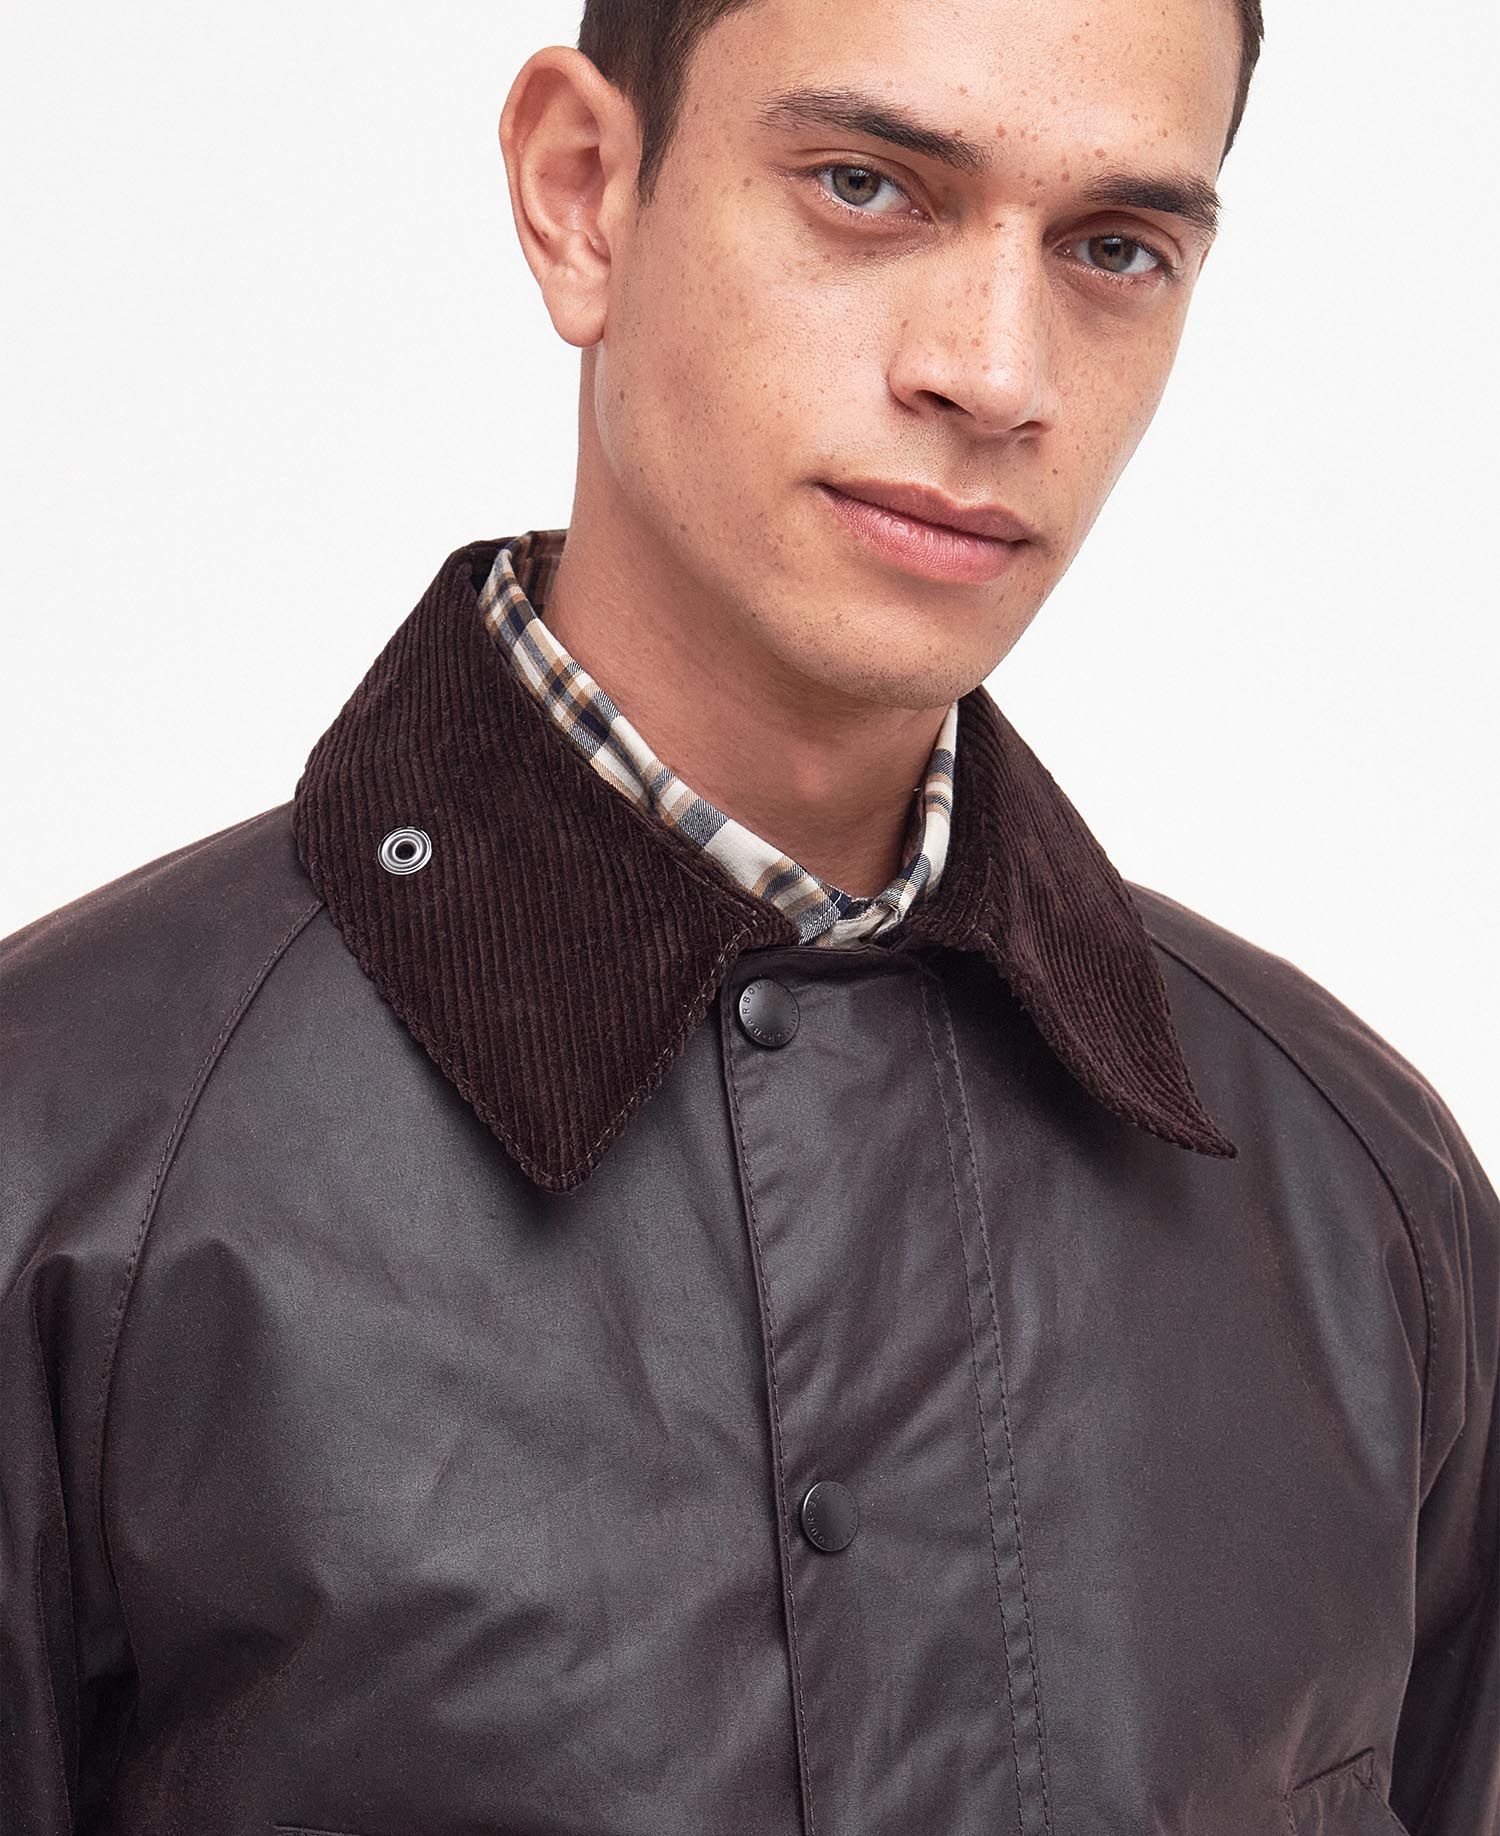 Barbour Bedale Wax Jacket | Detachable Hooded Jacket | Barbour